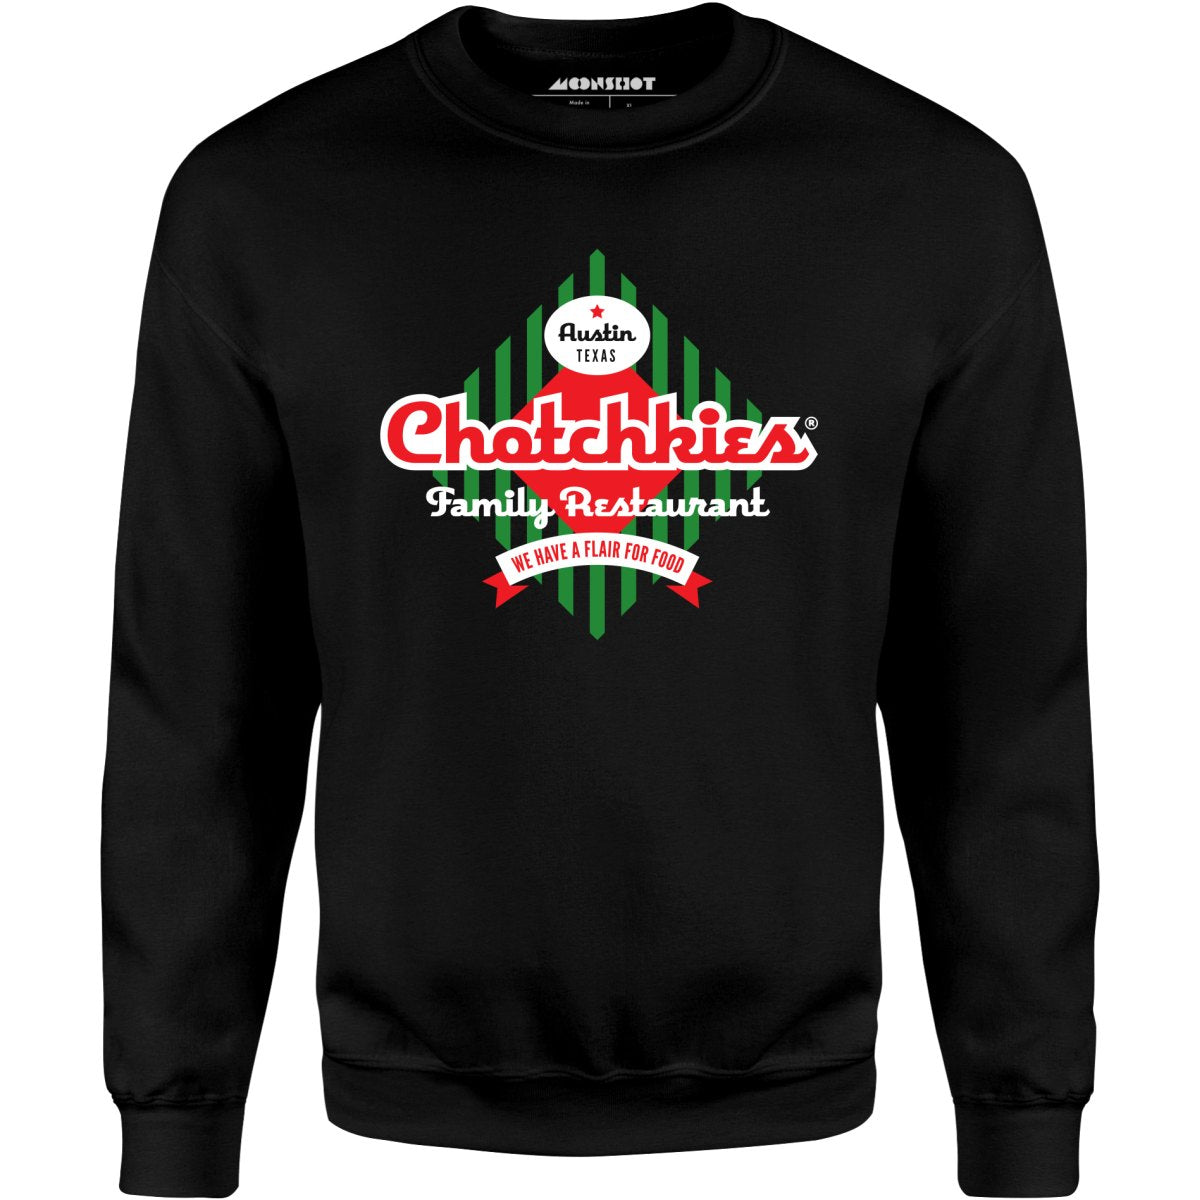 Chotchkie's Family Restaurant - Unisex Sweatshirt